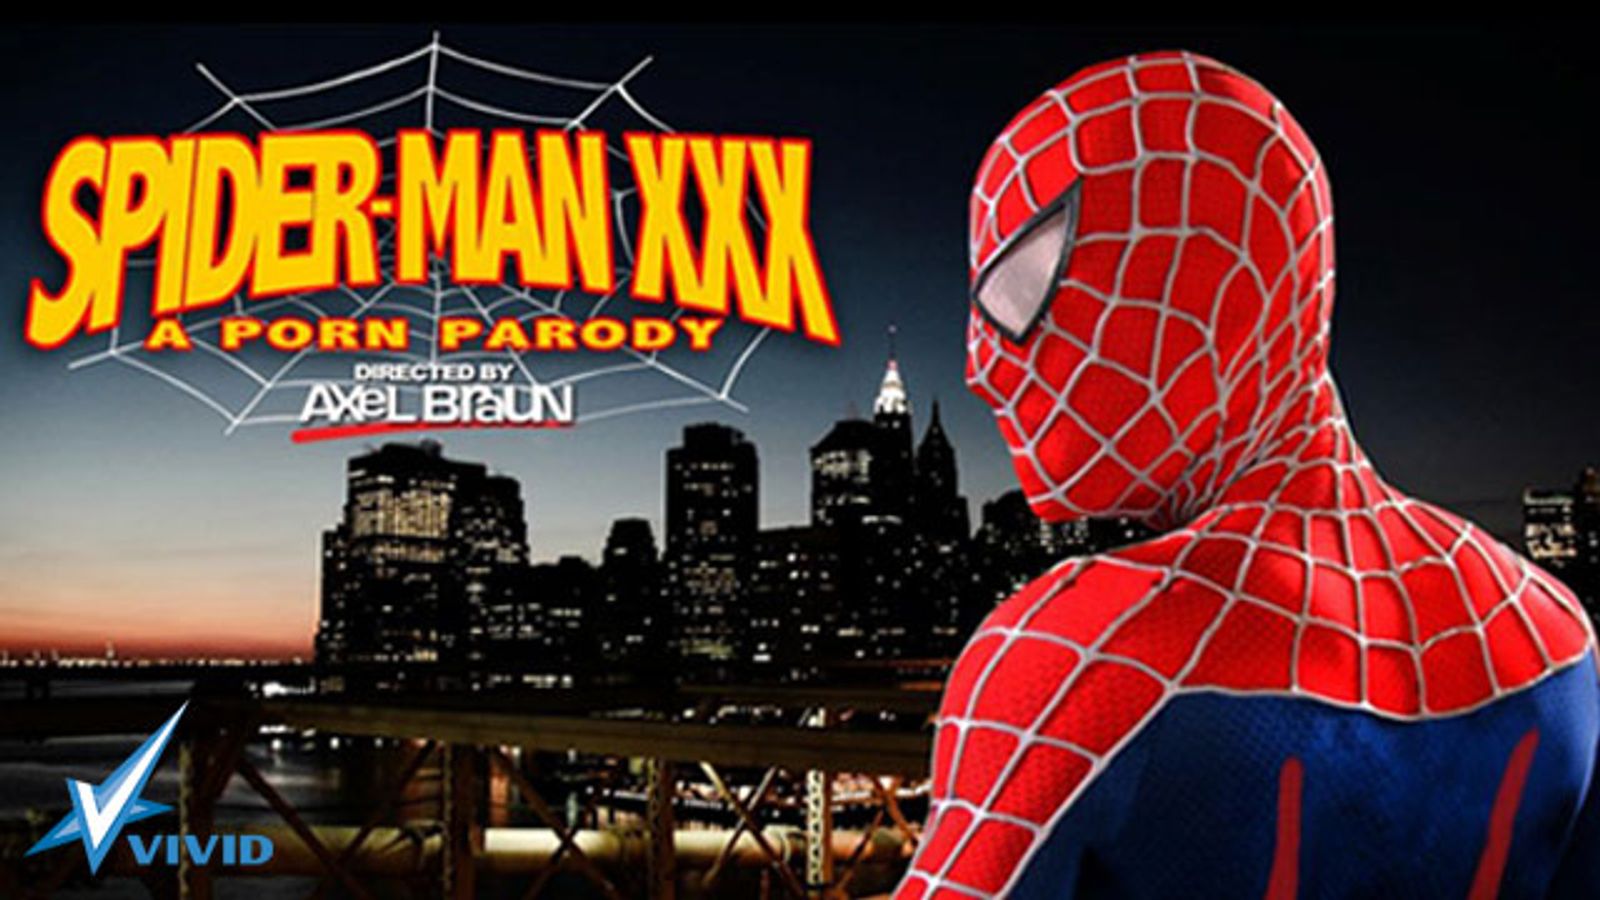 Vivid's 'Spider-Man XXX: A Porn Parody' Debuts Online Today | AVN